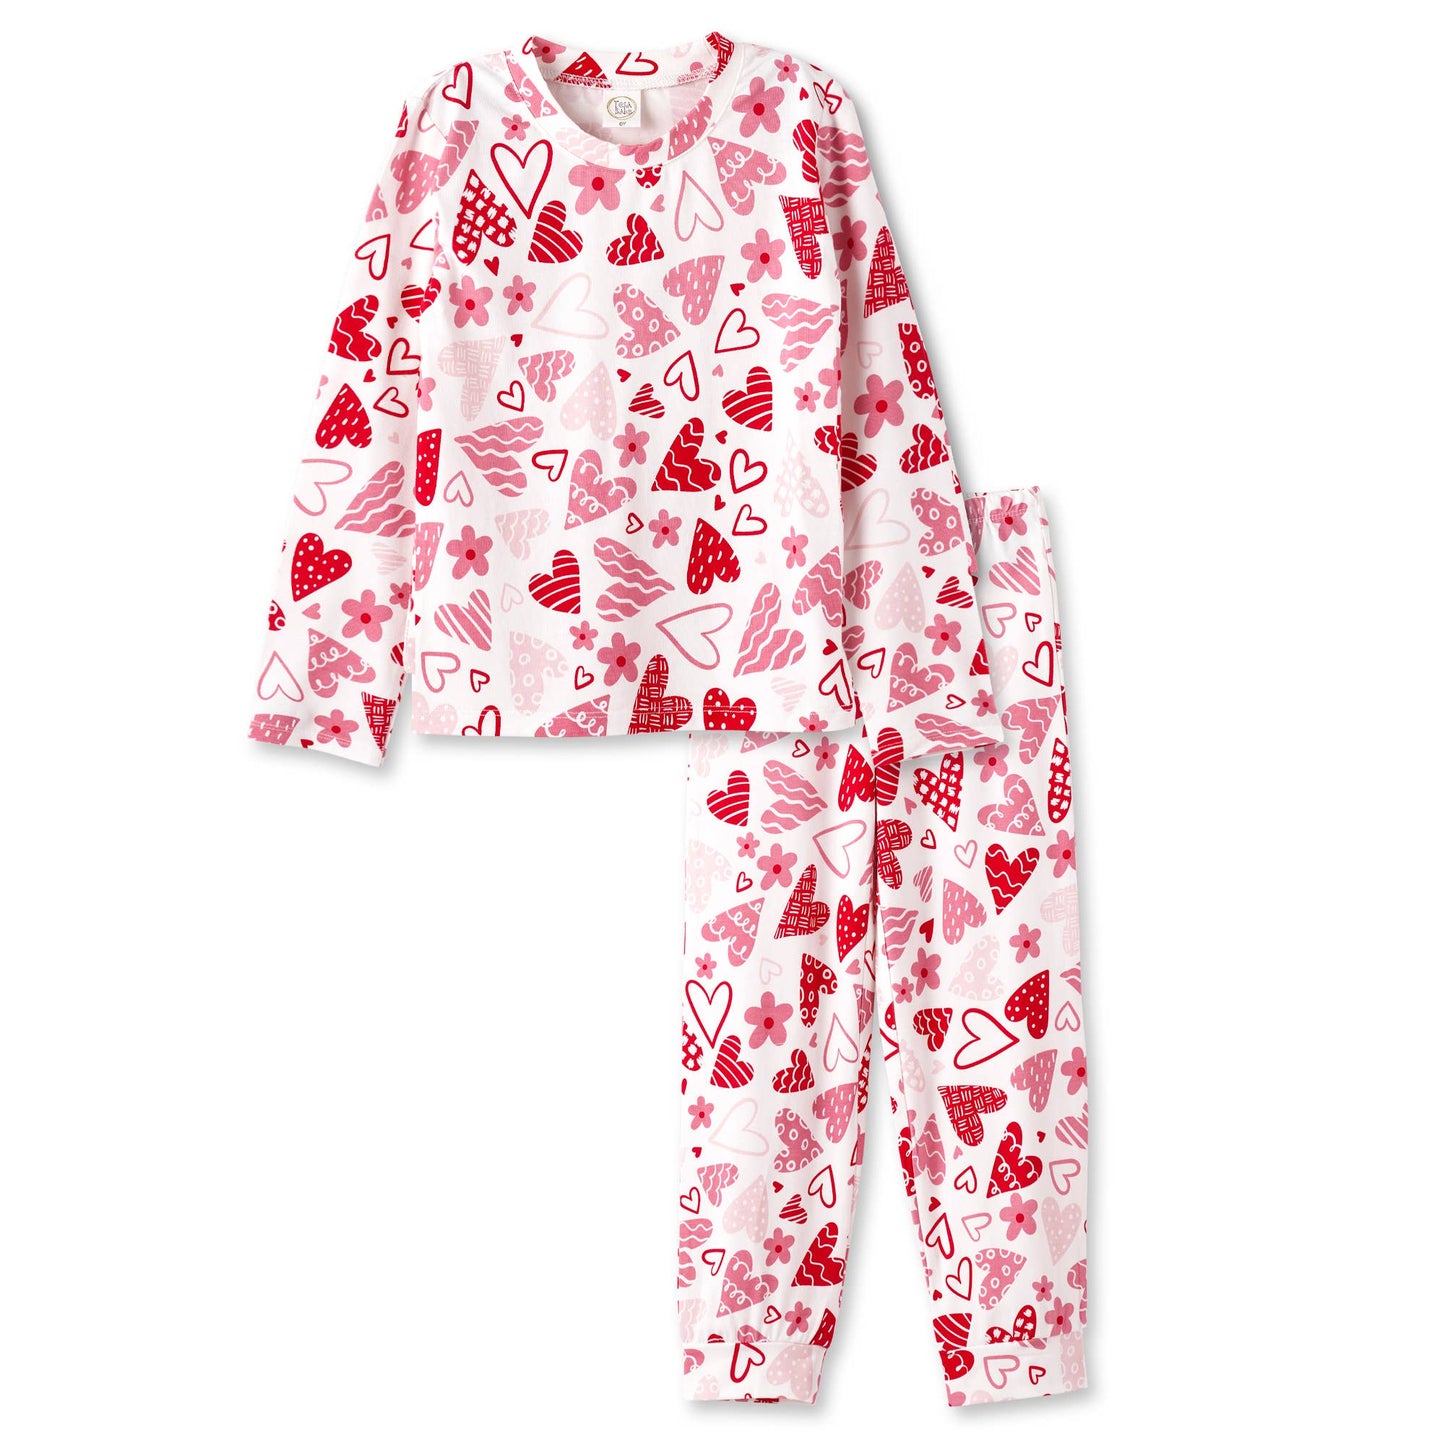 Tesa Babe Confetti Hearts Kid's Pajama Set